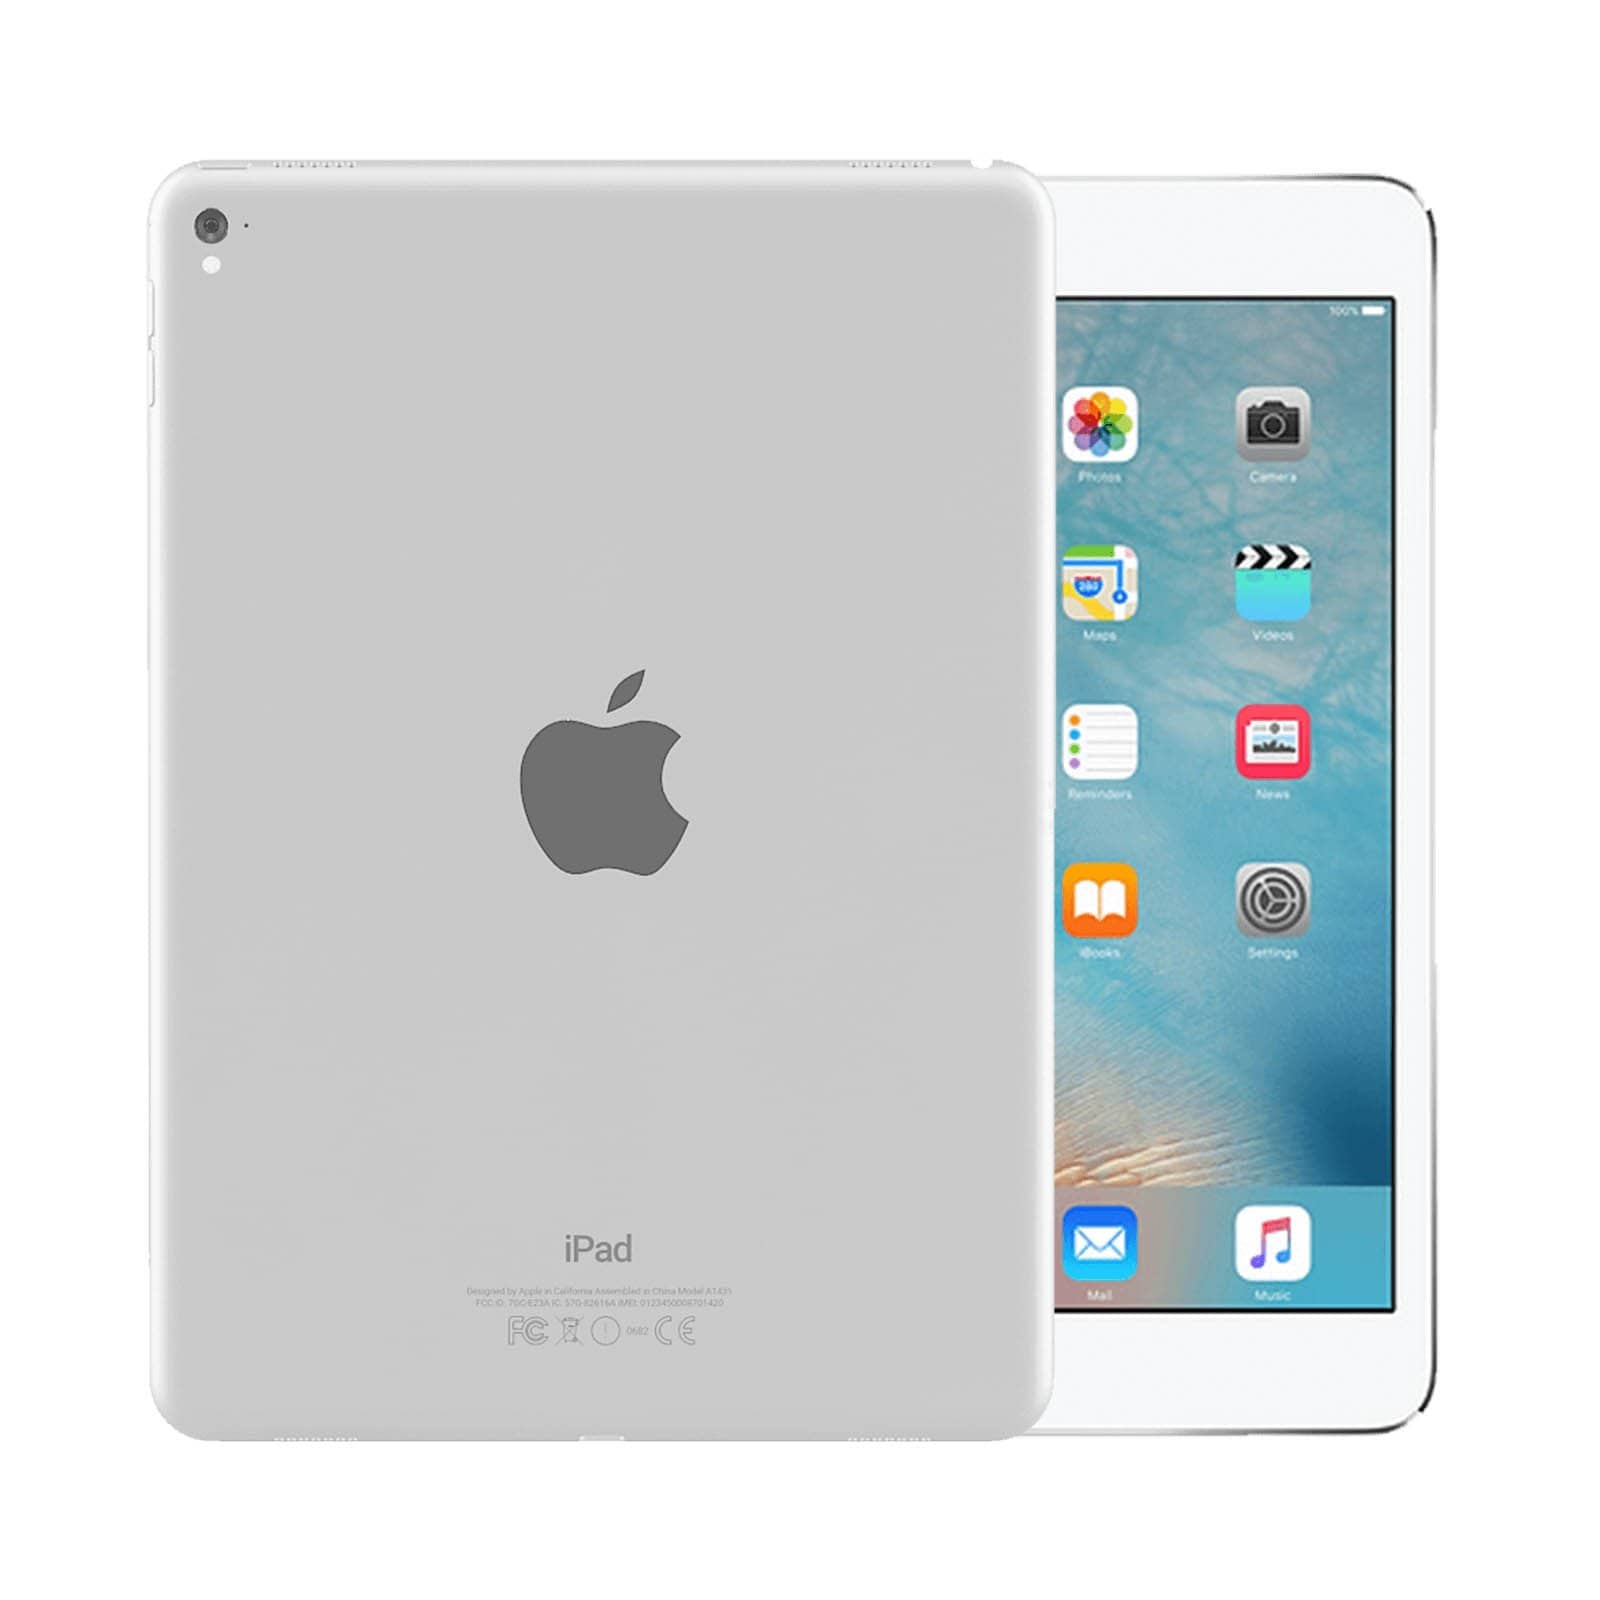 iPad Pro 9.7 Inch 128GB Silver Very Good - WiFi 128GB Silver Very Good